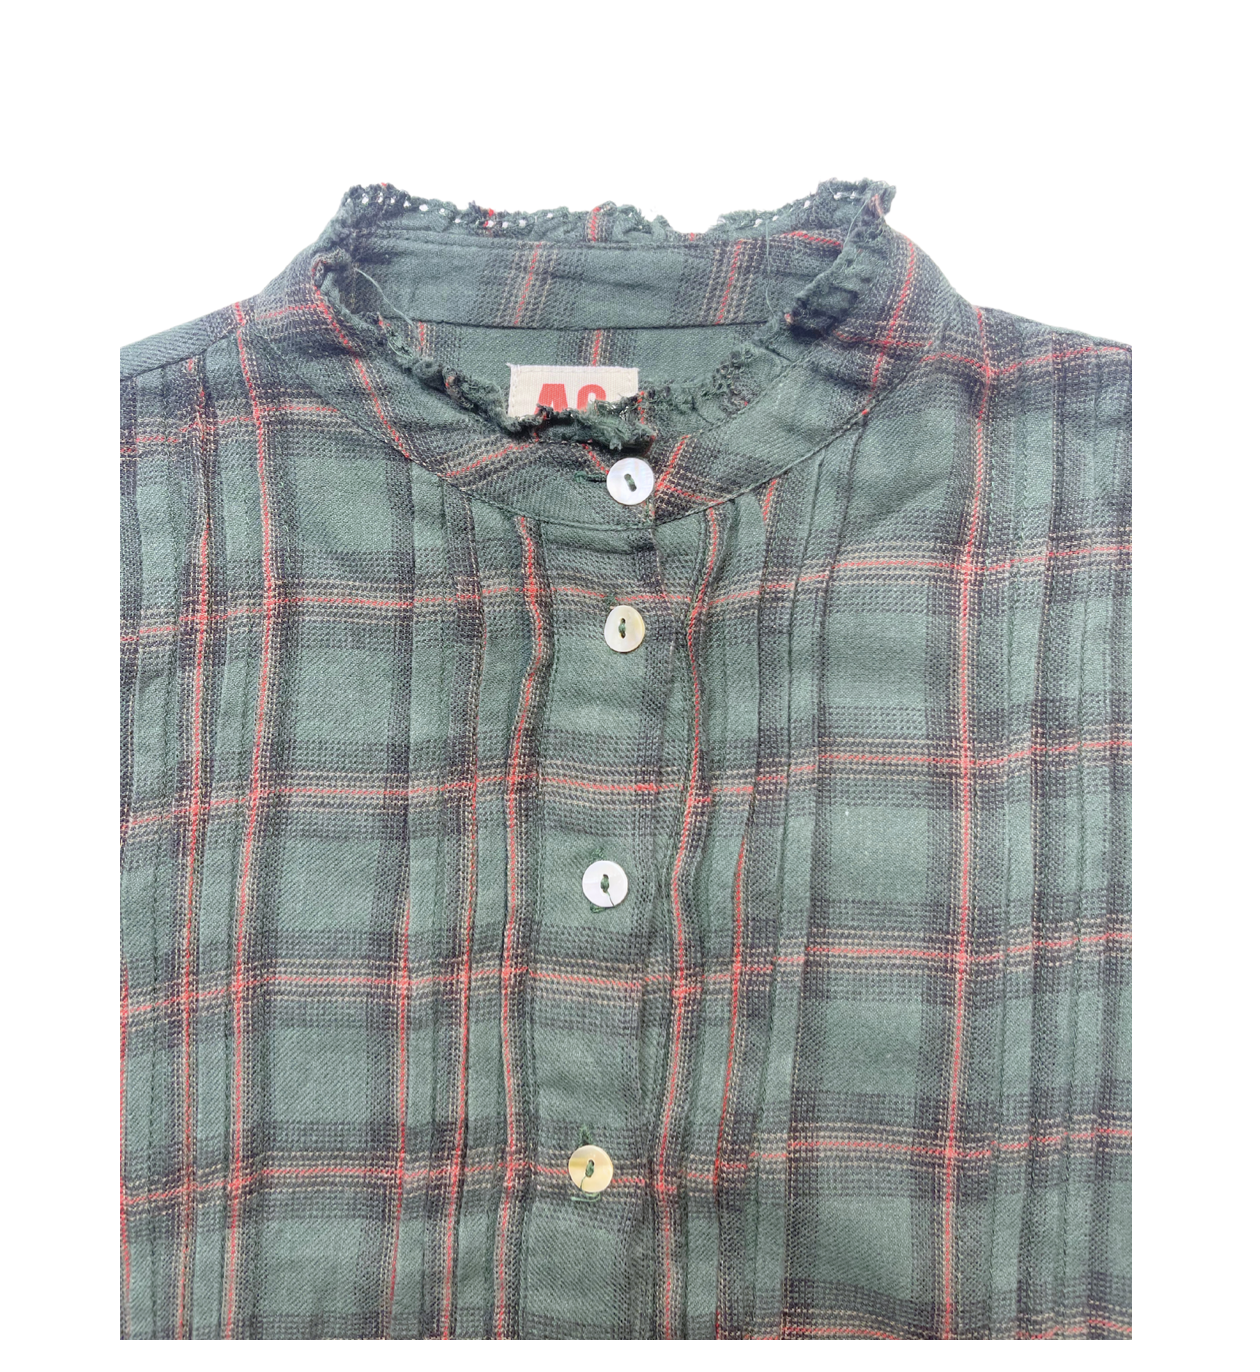 AO76 - Robe chemise à carreaux verte - 6 ans